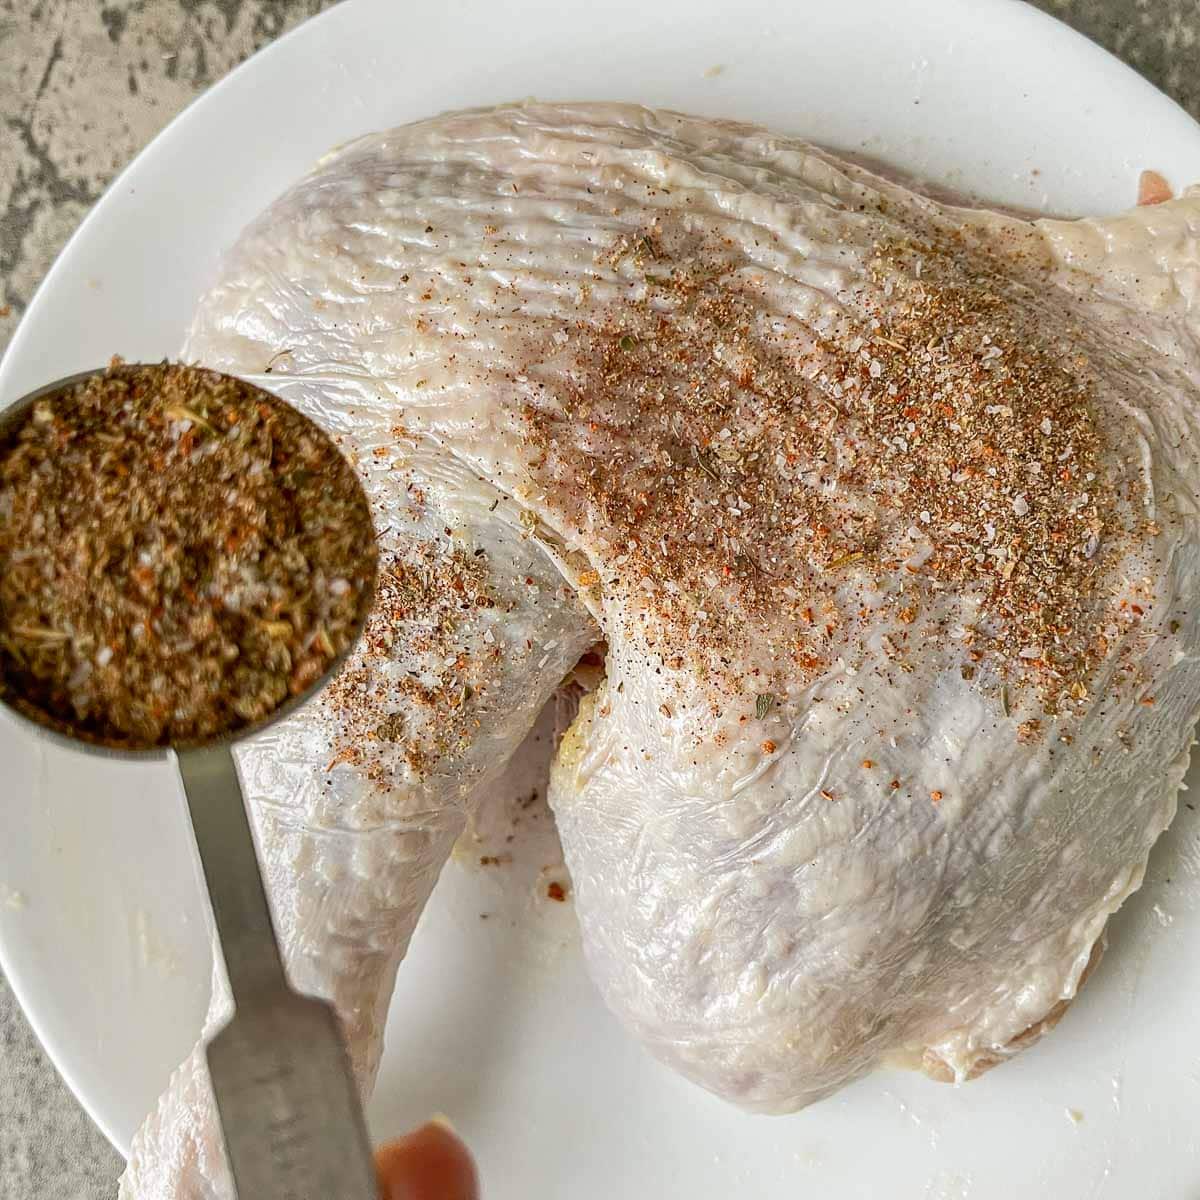 sprinklinf turkey leg with turkey rub